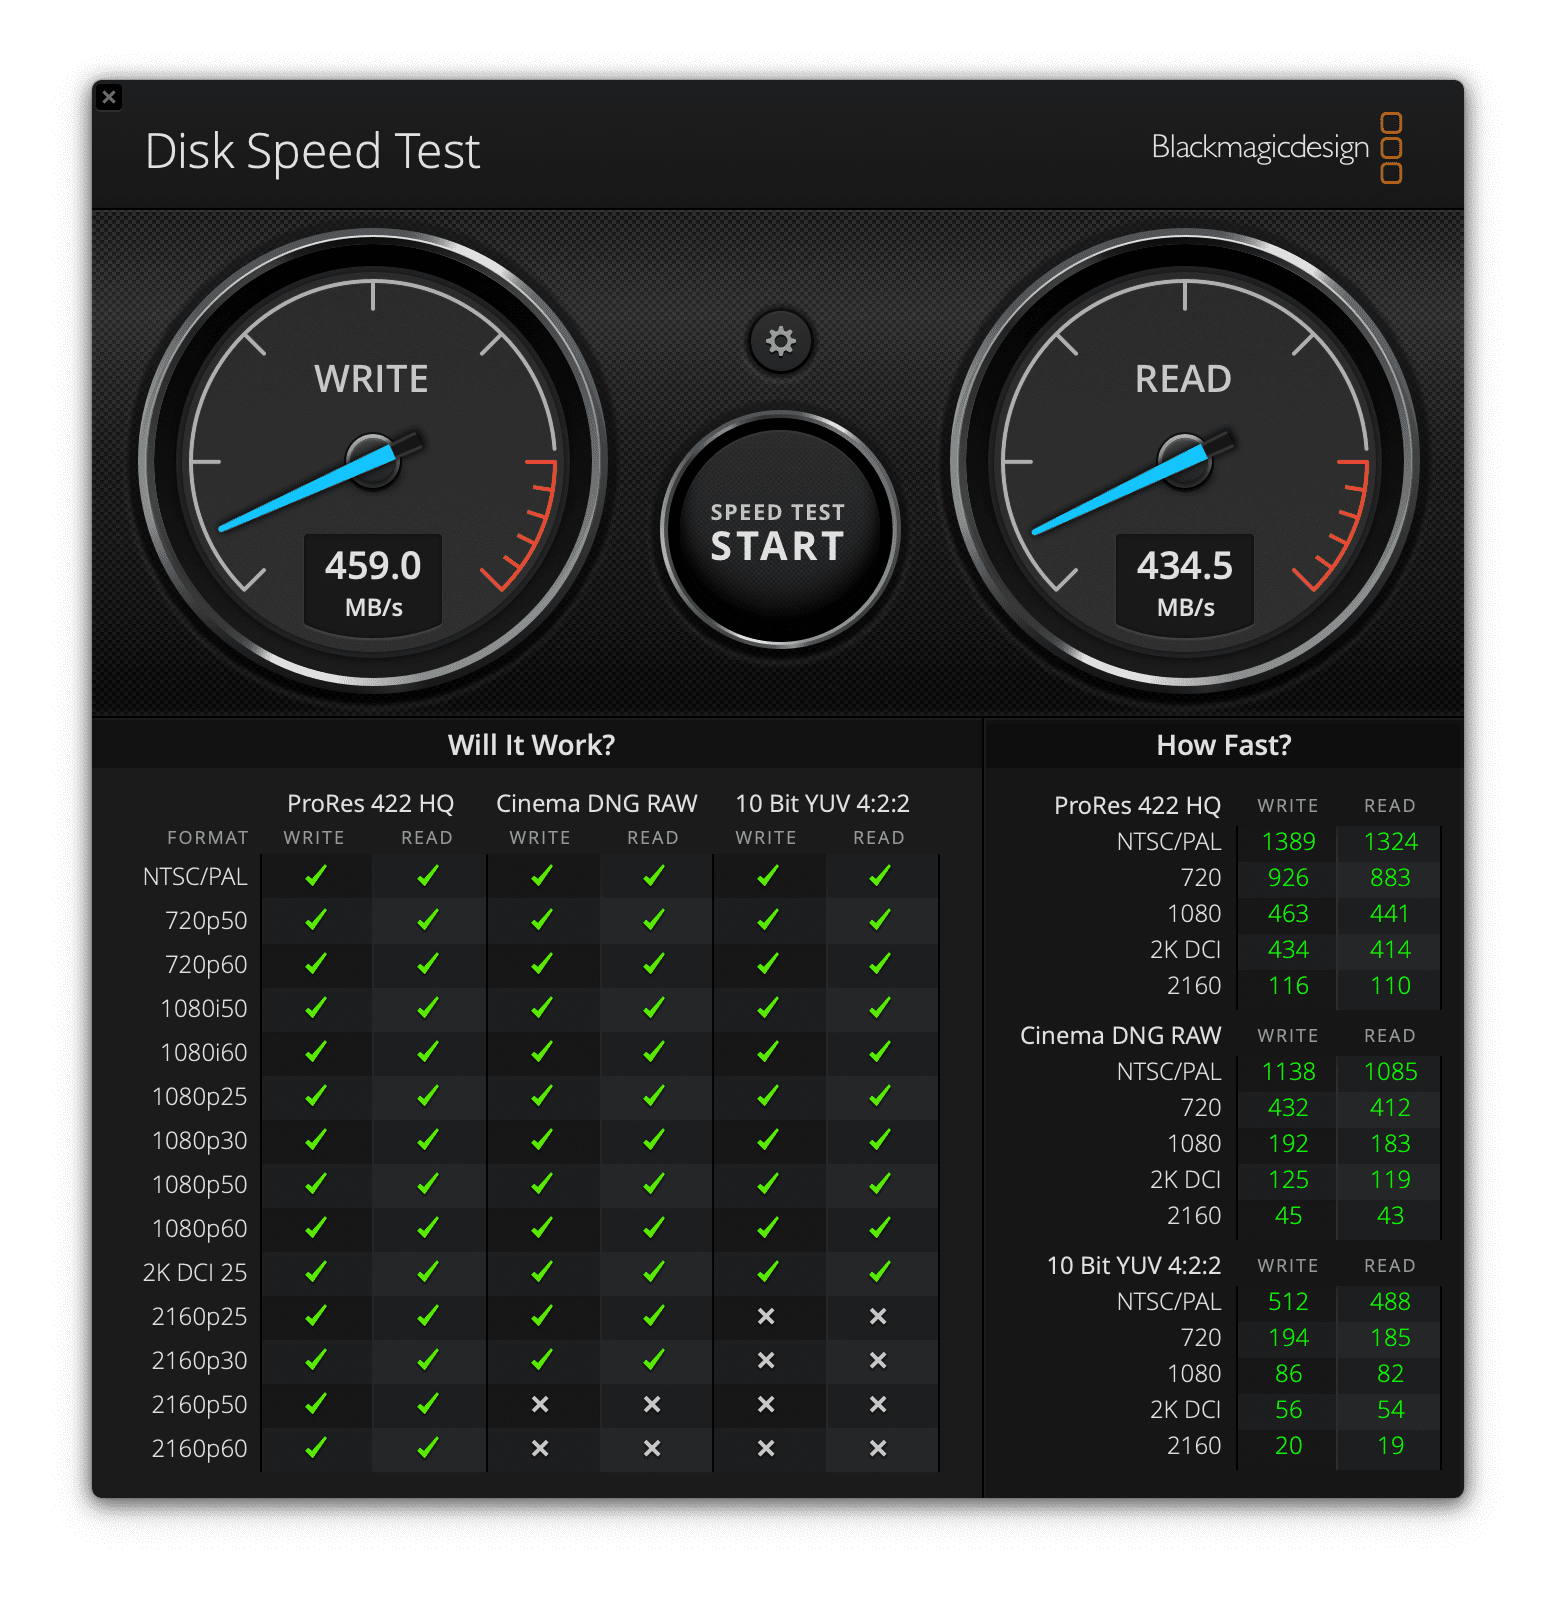 Les résultats du benchmark du X210 Elite : environ 450 Mb/s